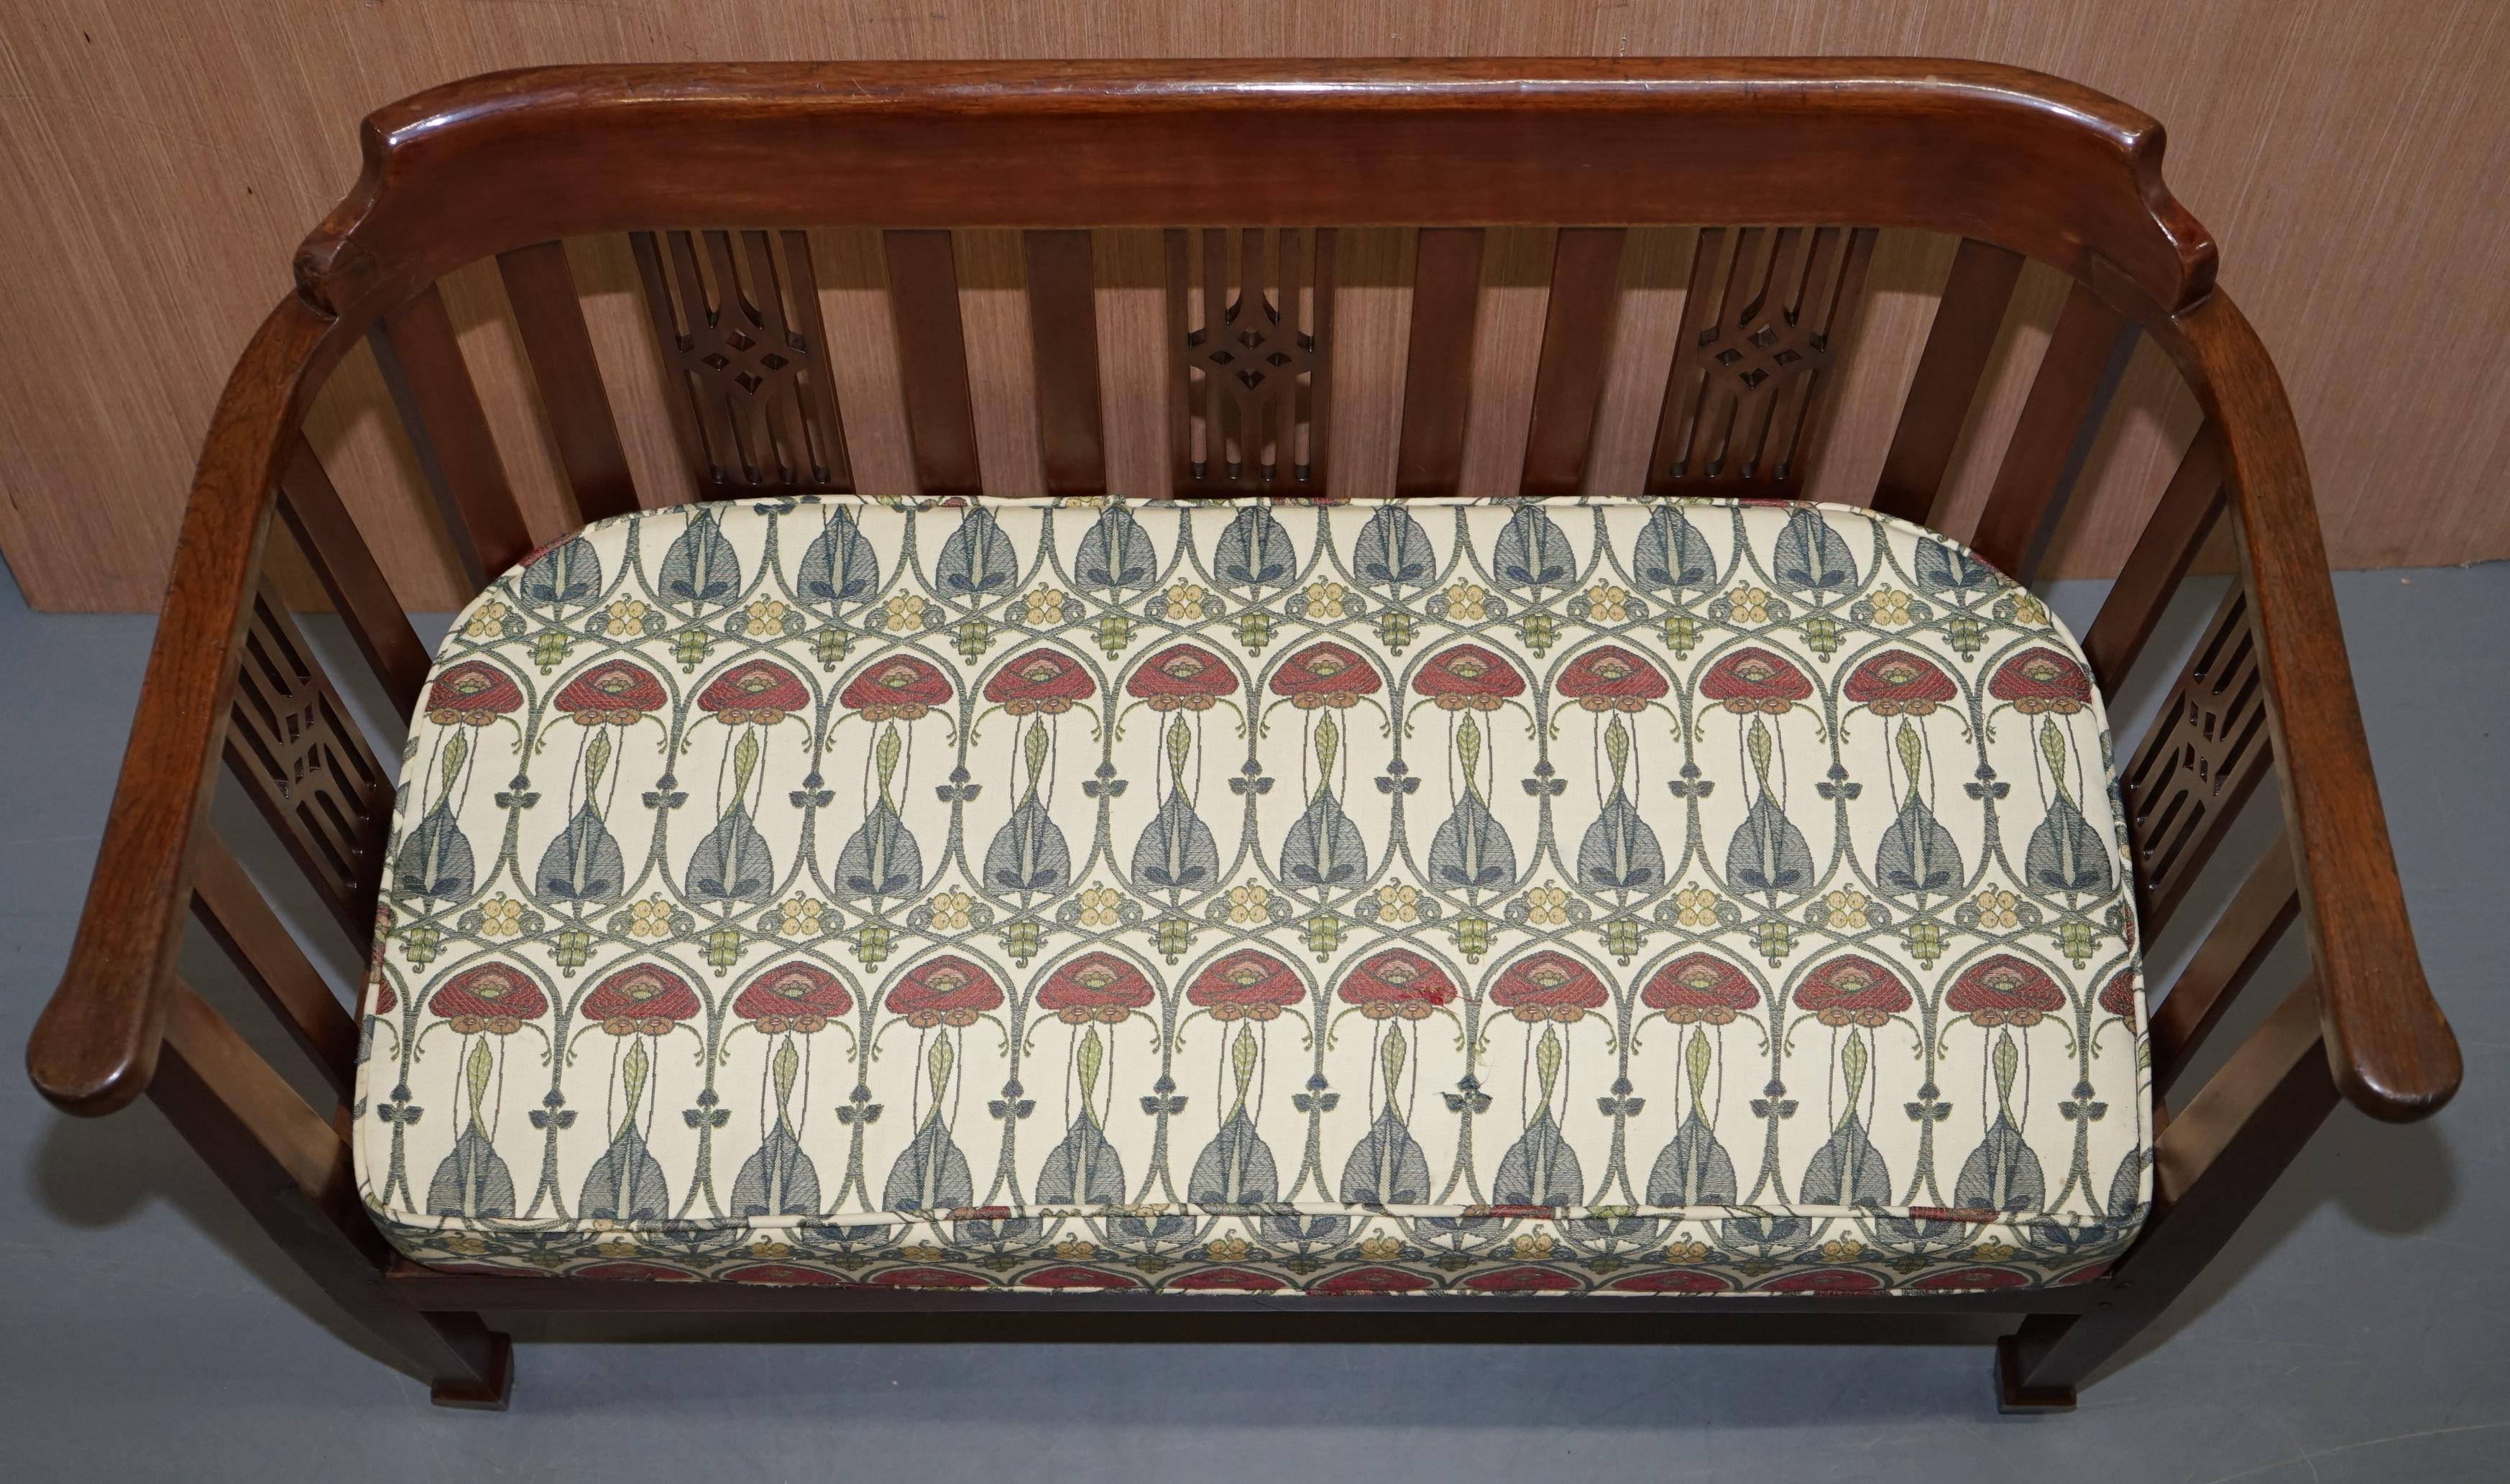 Rattan Charles Rennie Mackintosh Art Nouveau upholstered 2 seat bench sofa berger seat